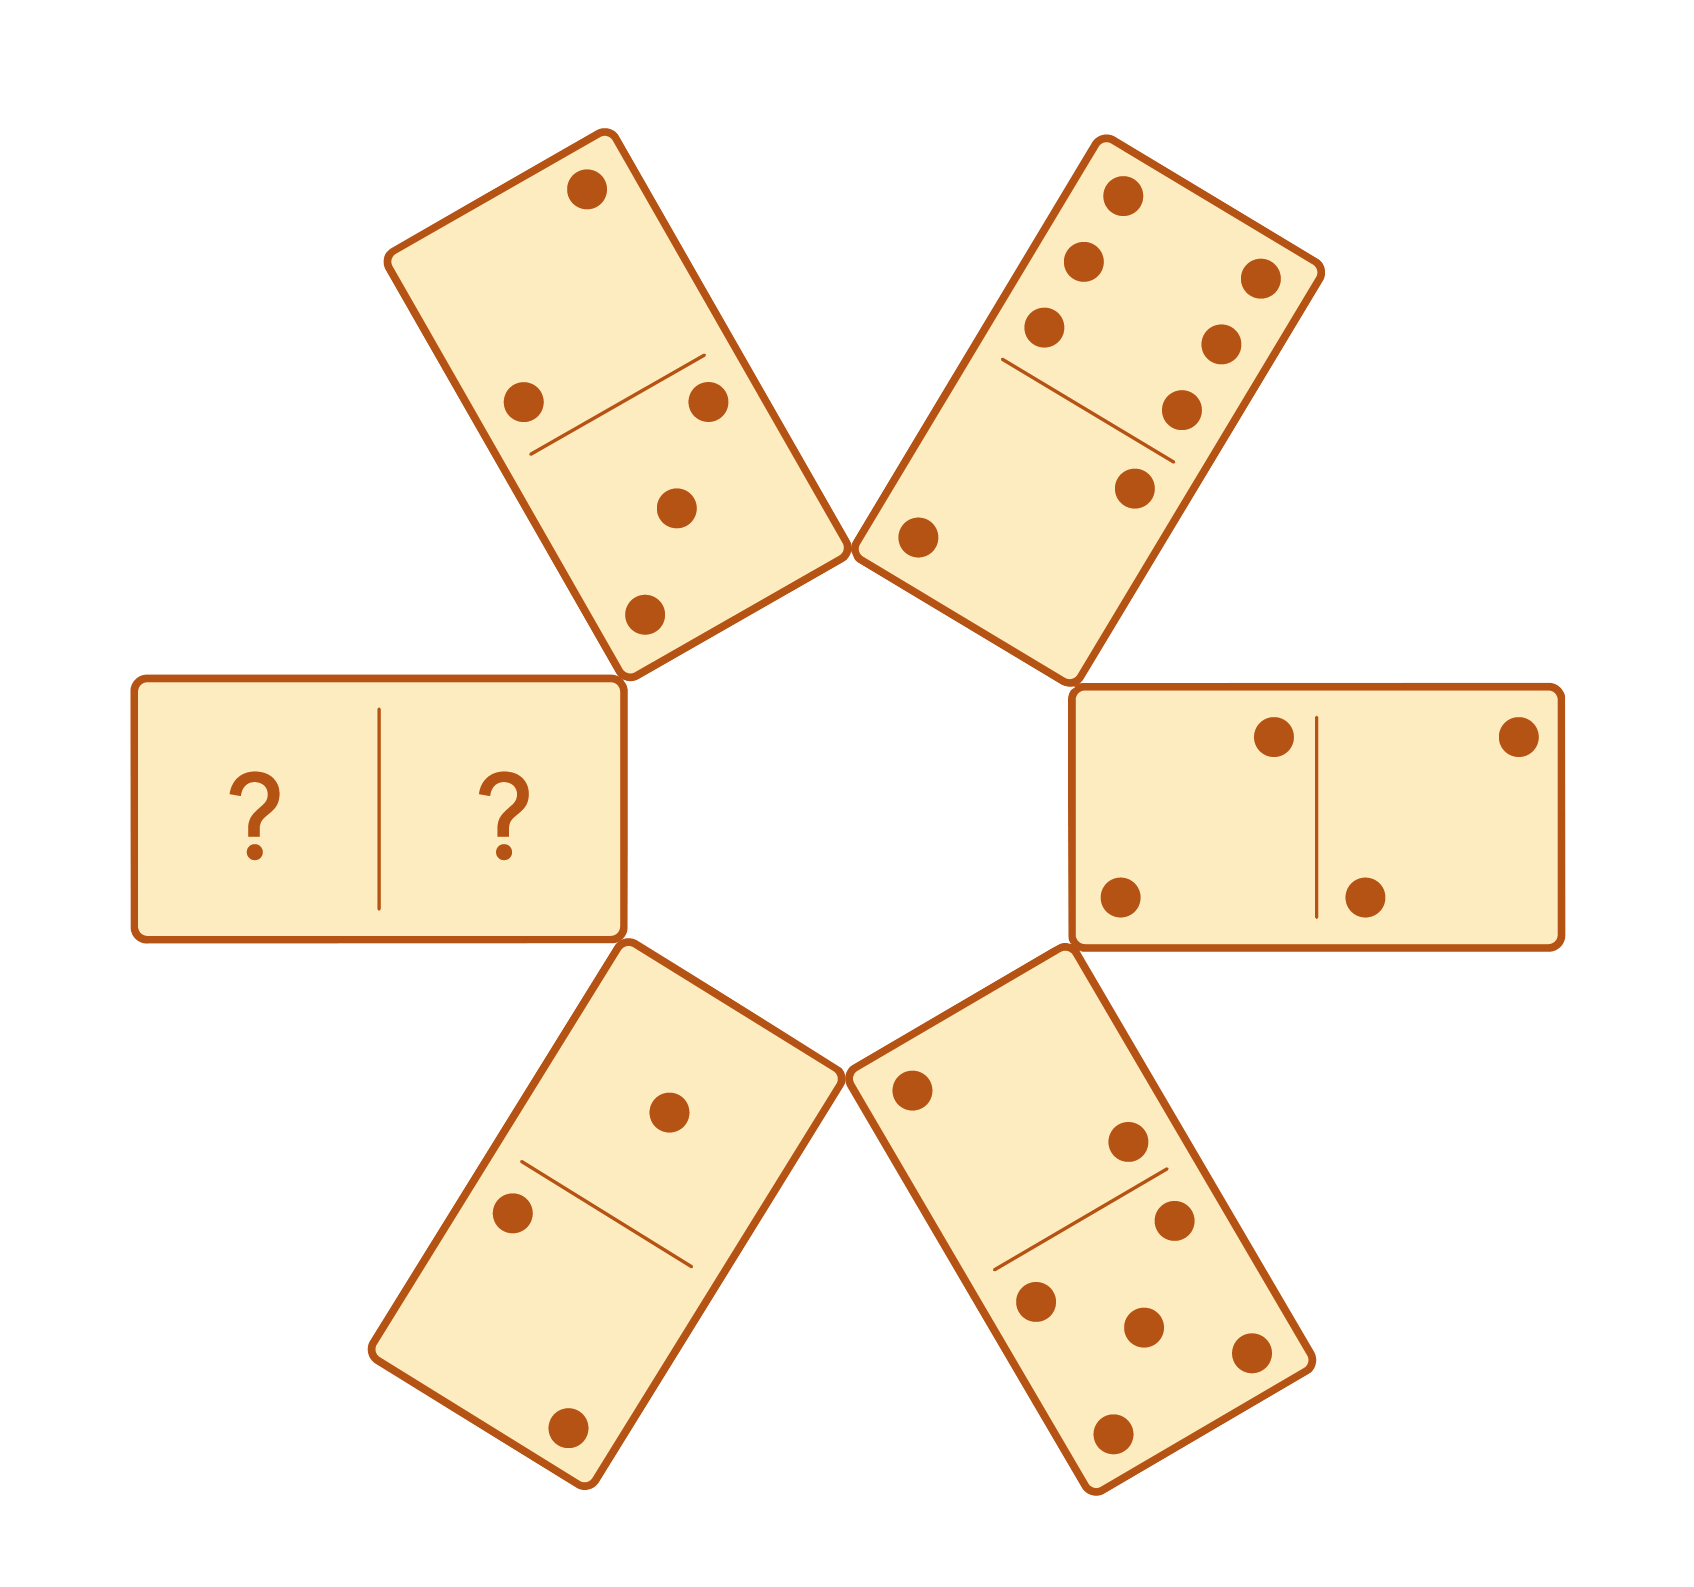 Descubra a lógica do dominó - SUPERA - Ginástica para o Cérebro